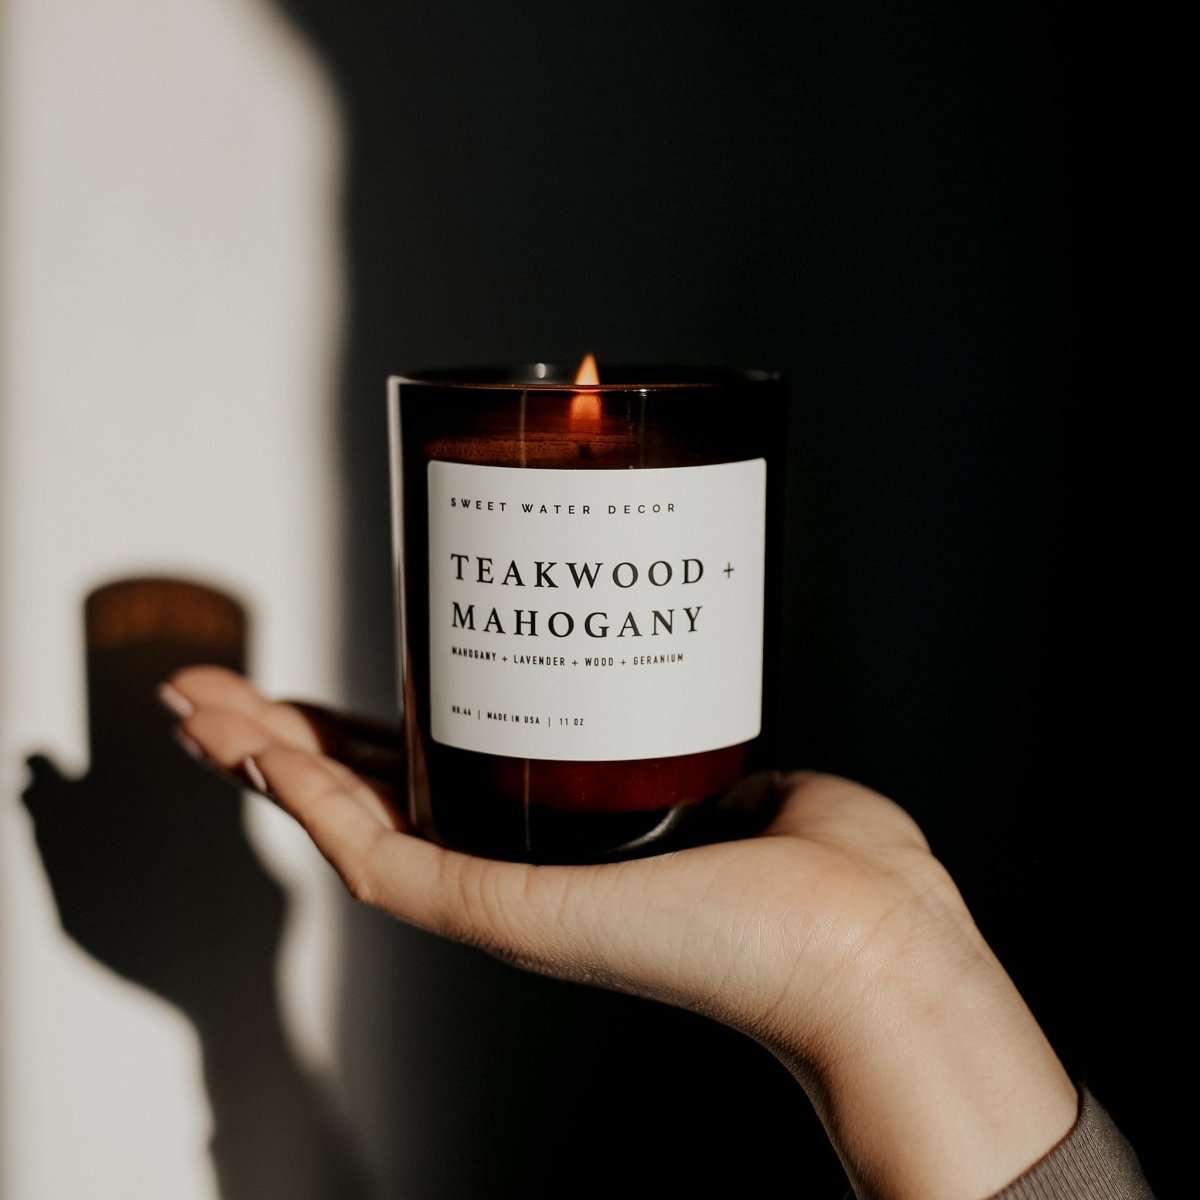 Sweet Water Decor Teakwood and Mahogany Soy Candle - Amber Jar - 11 oz - lily & onyx